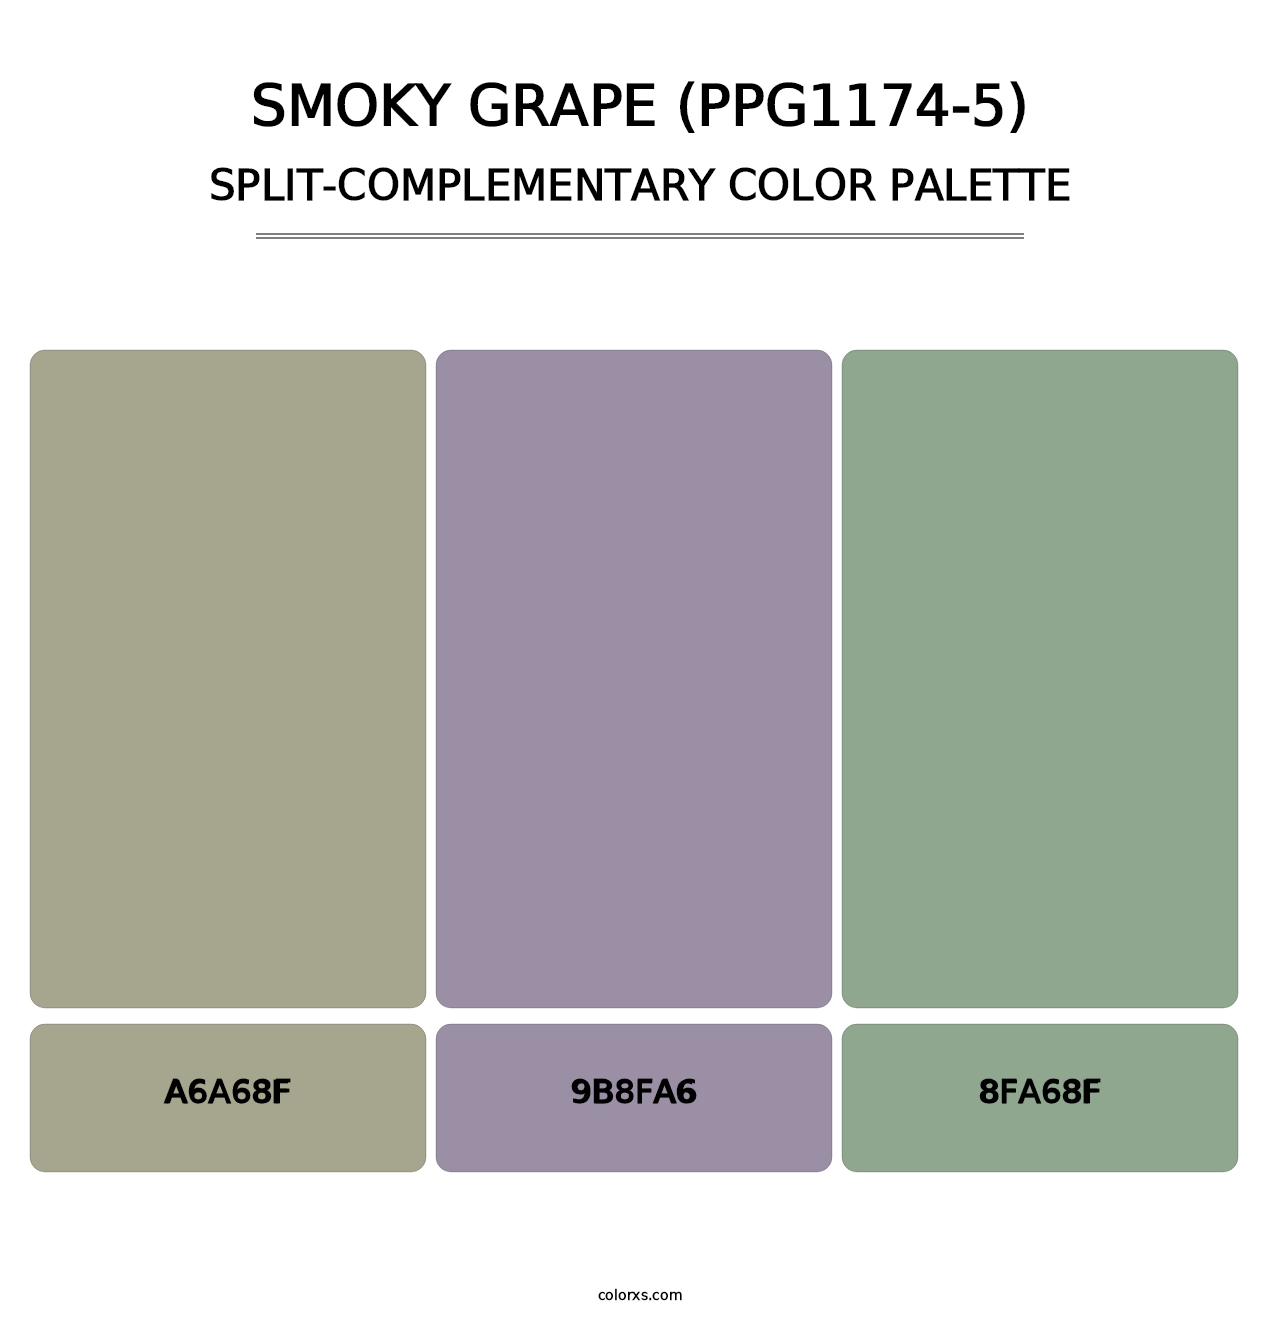 Smoky Grape (PPG1174-5) - Split-Complementary Color Palette